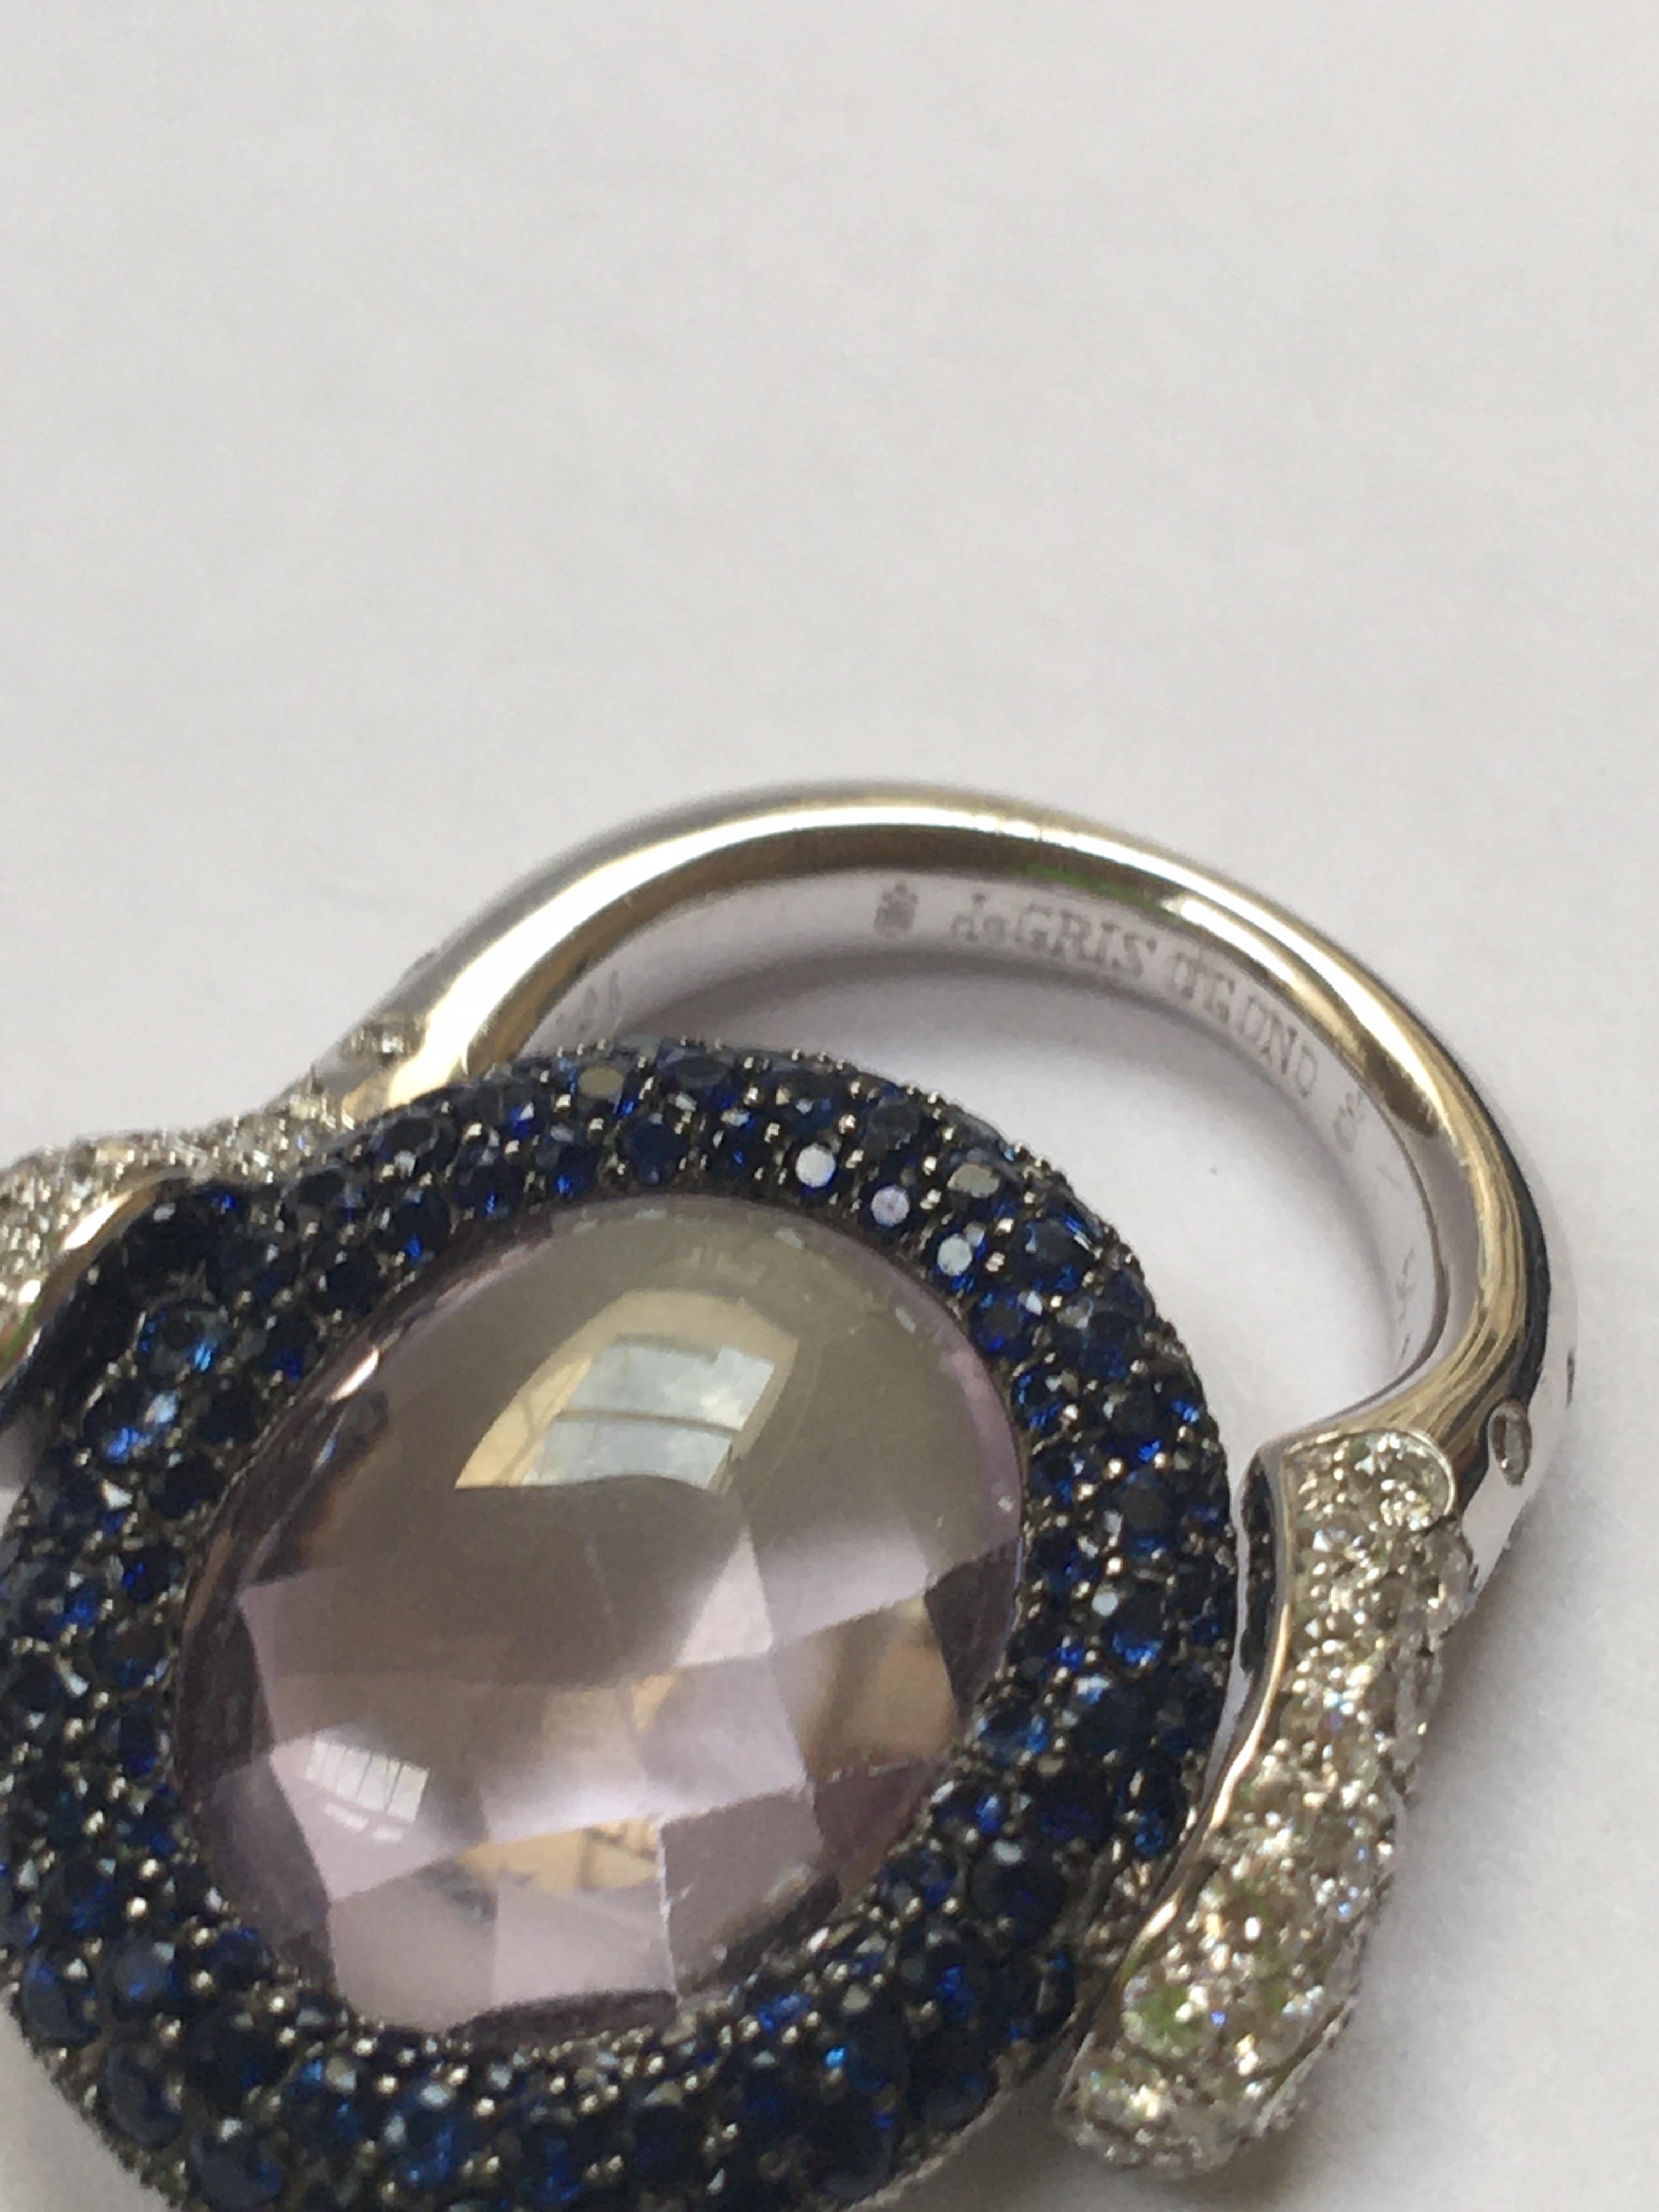 Diamond Sapphire Kunzite Rotating Ring de Grisogono 18 Karat White Gold 5